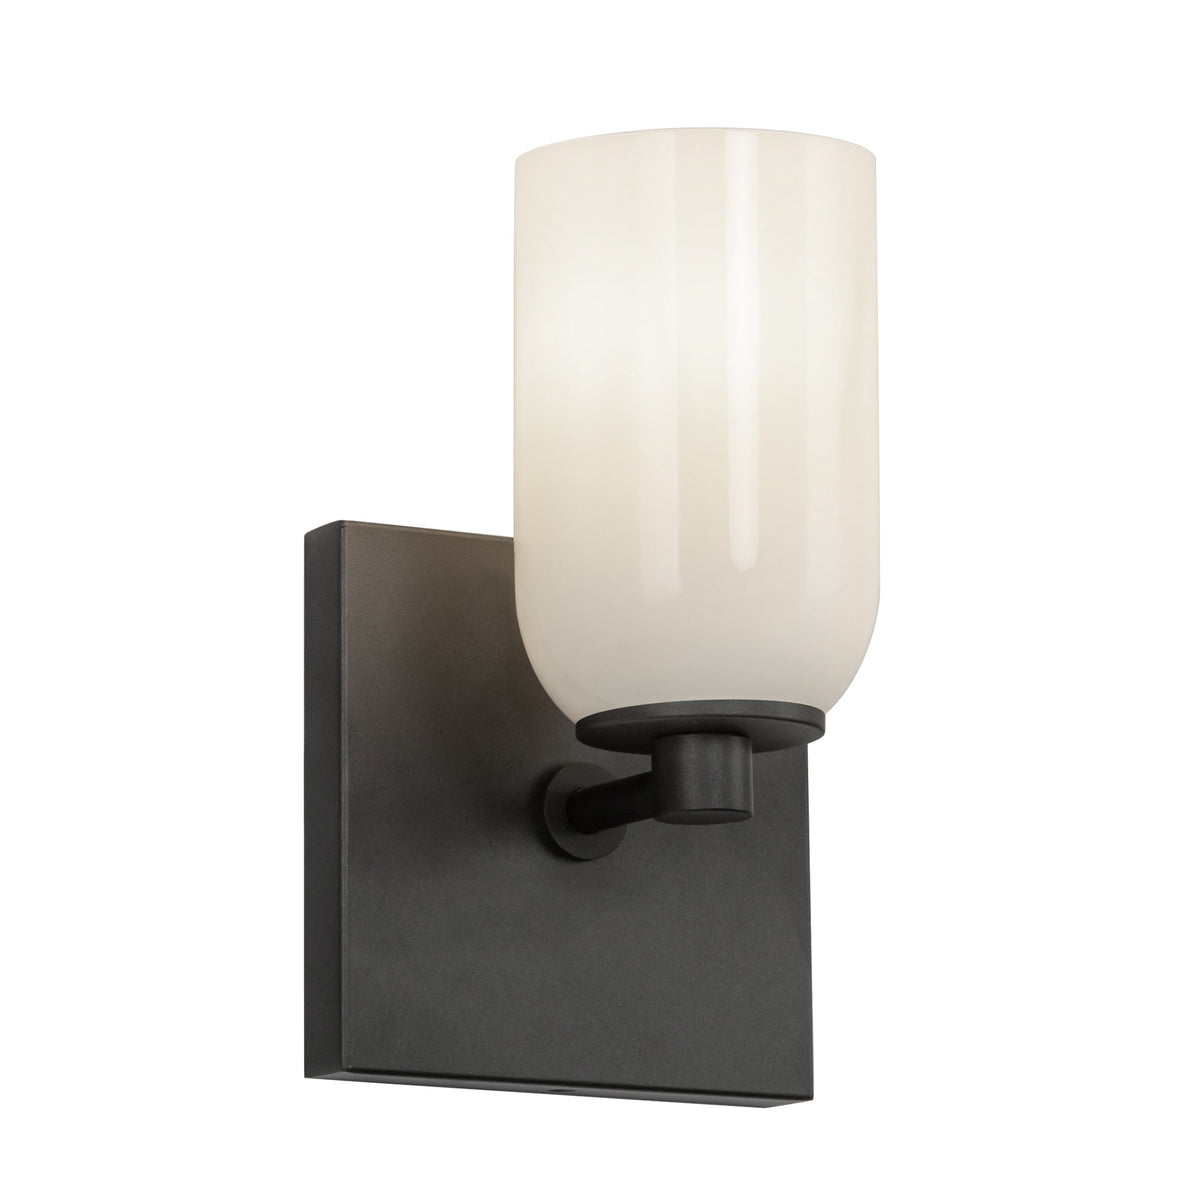 Kuzco Canada - WS57704-BK/GO - One Light Wall Sconce - Nola - Black/Glossy Opal Glass